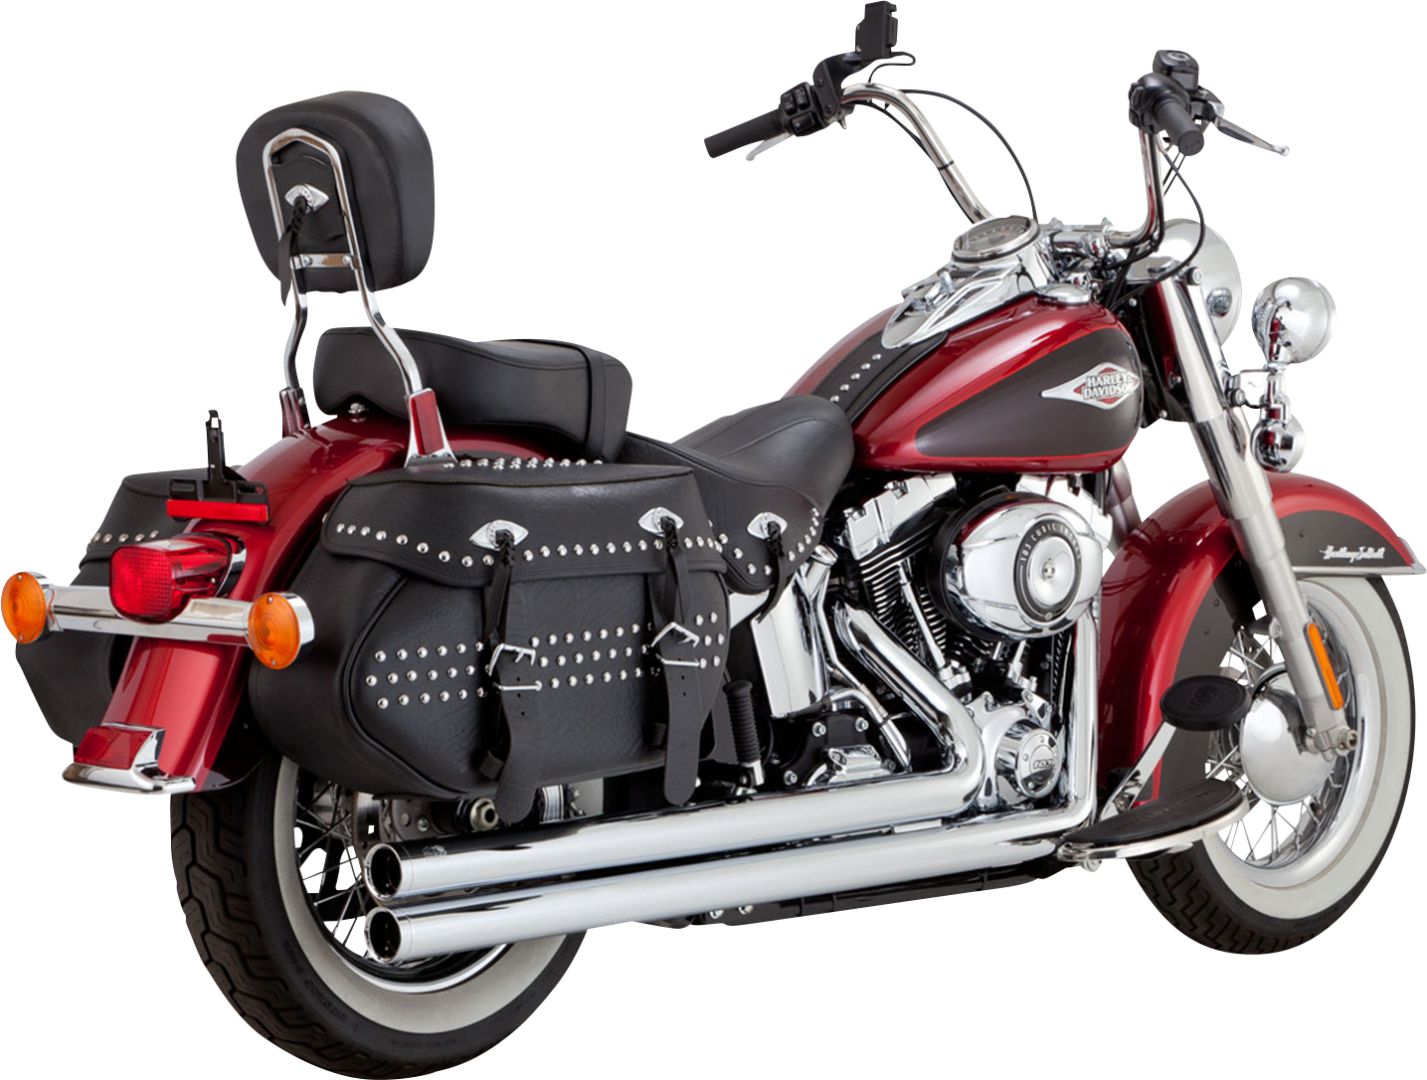 Vance & hines EXHAUST BS LG CH PCX EST Harley Davidson FLSTC 1340 Heritage Softail Classic motor kipufogó 0